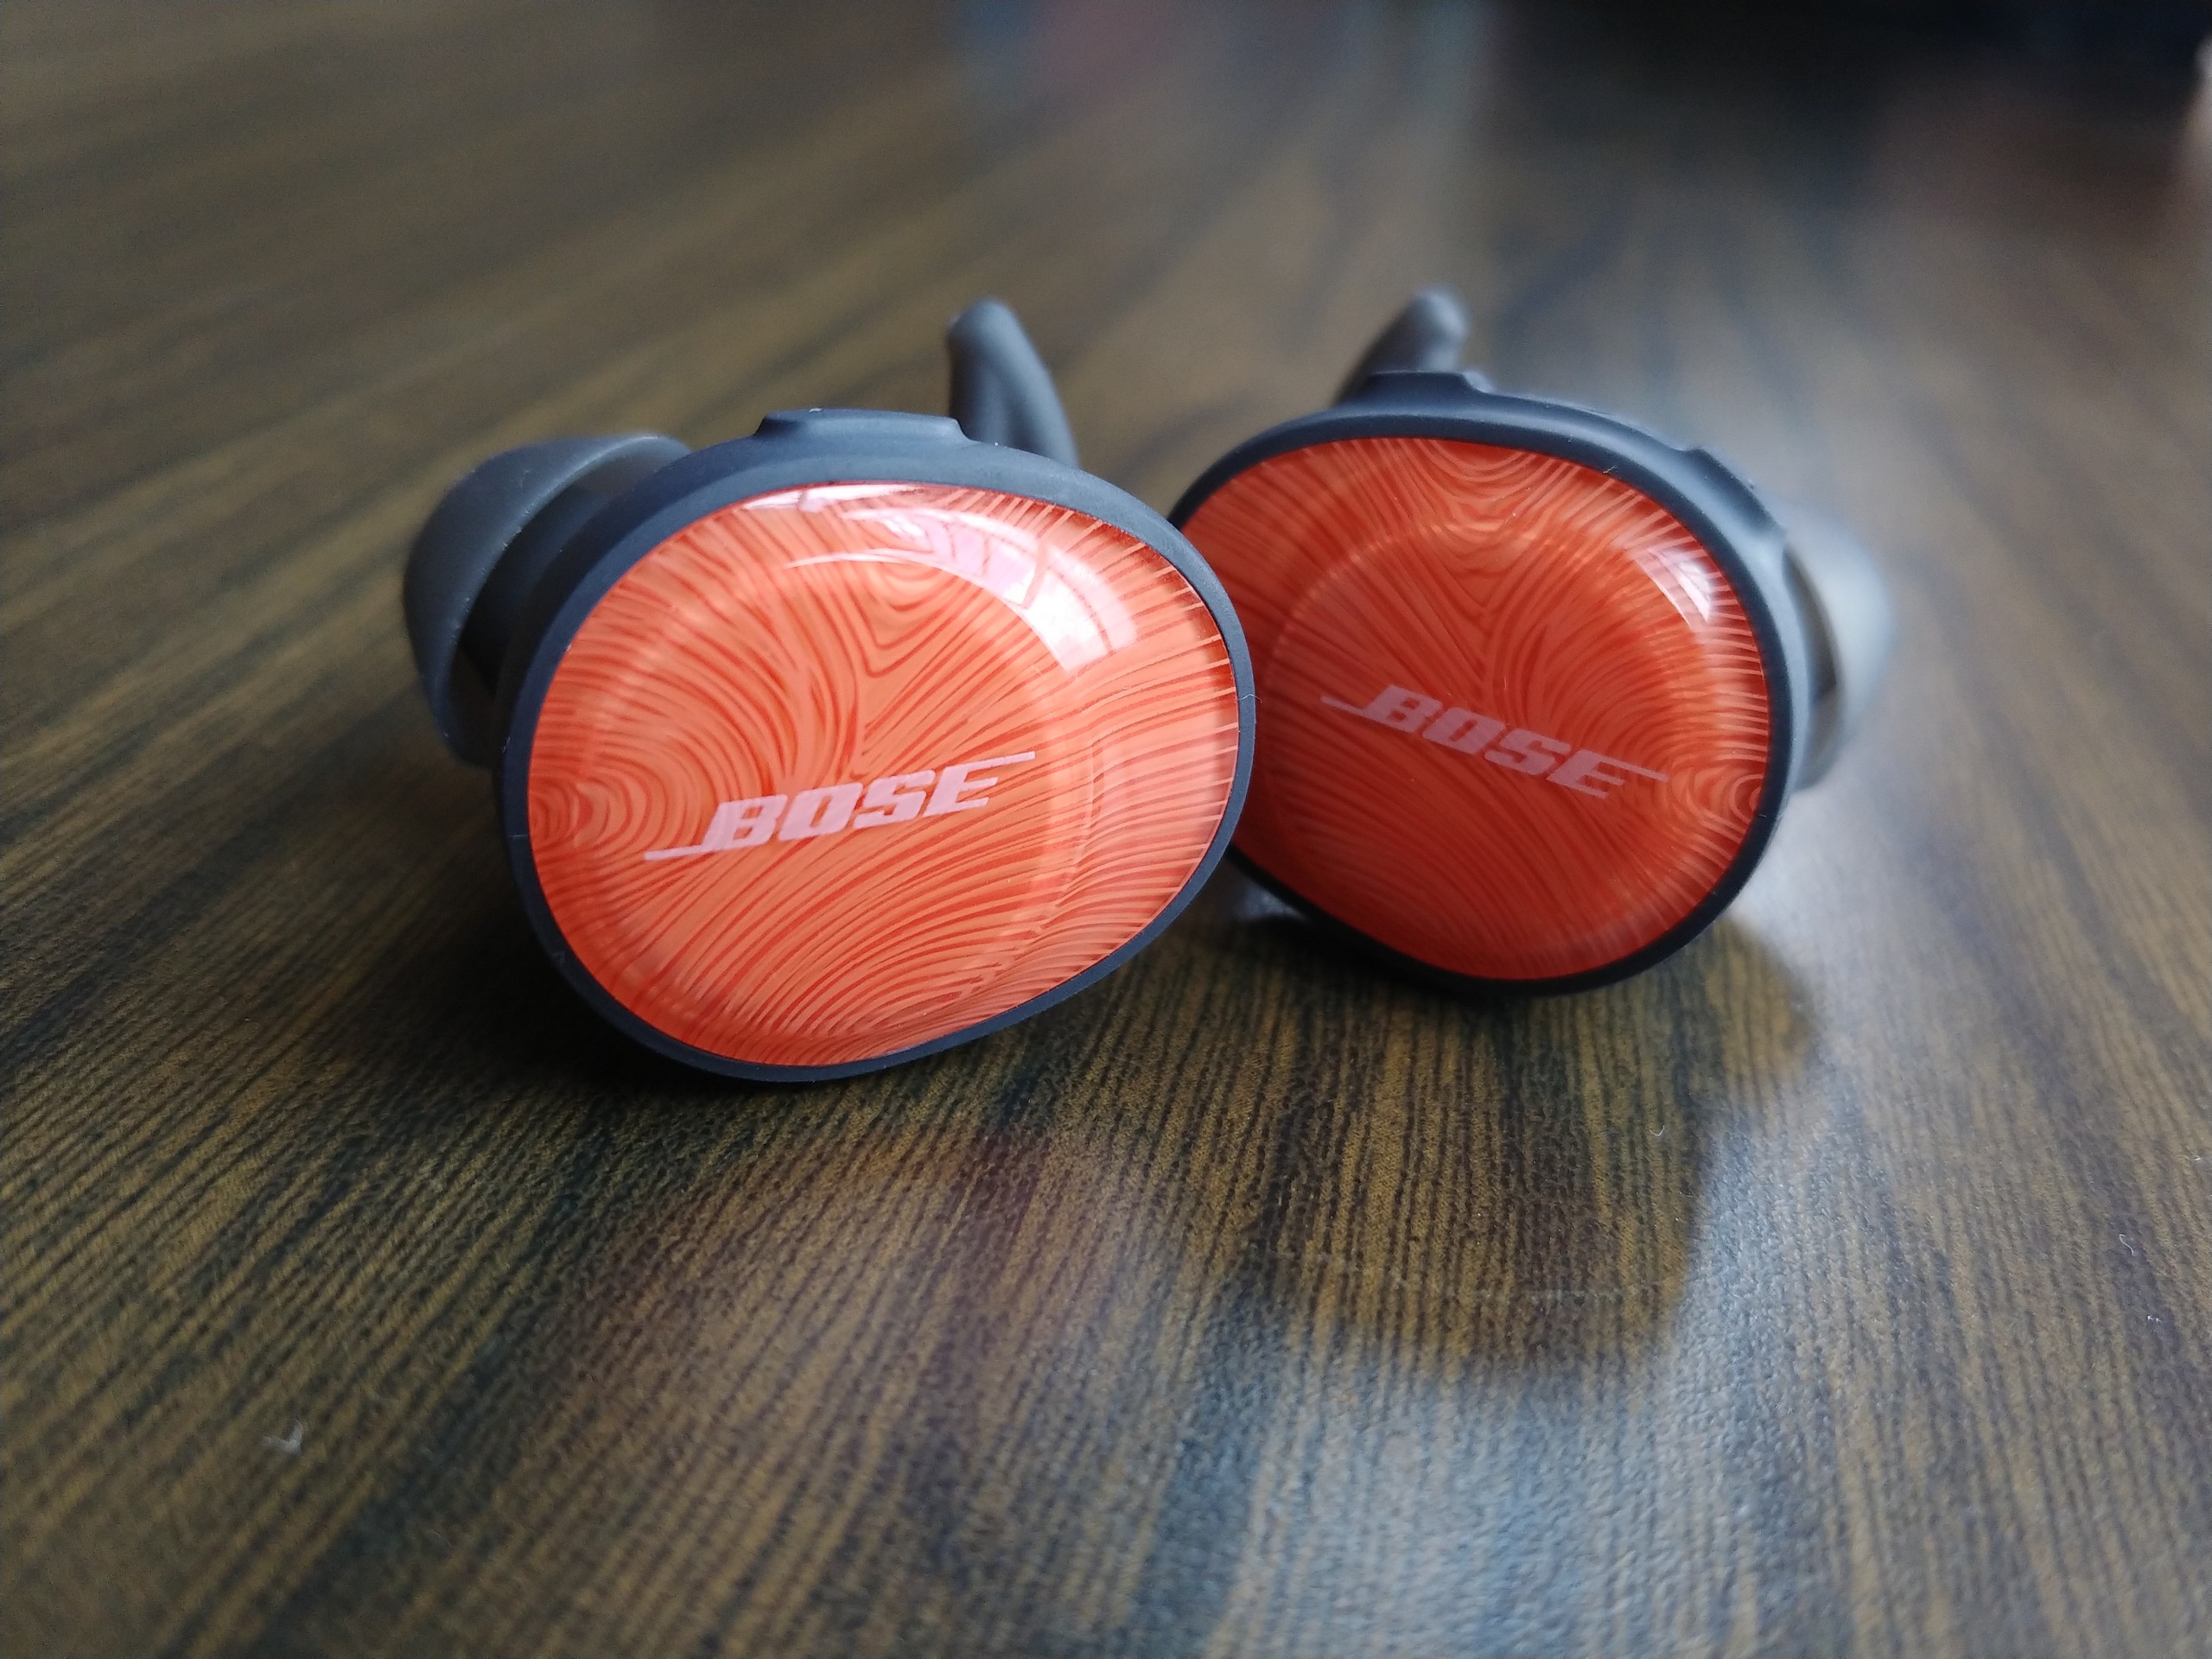 Goondu review: Bose SoundSport Free sound decent for sports - Techgoondu